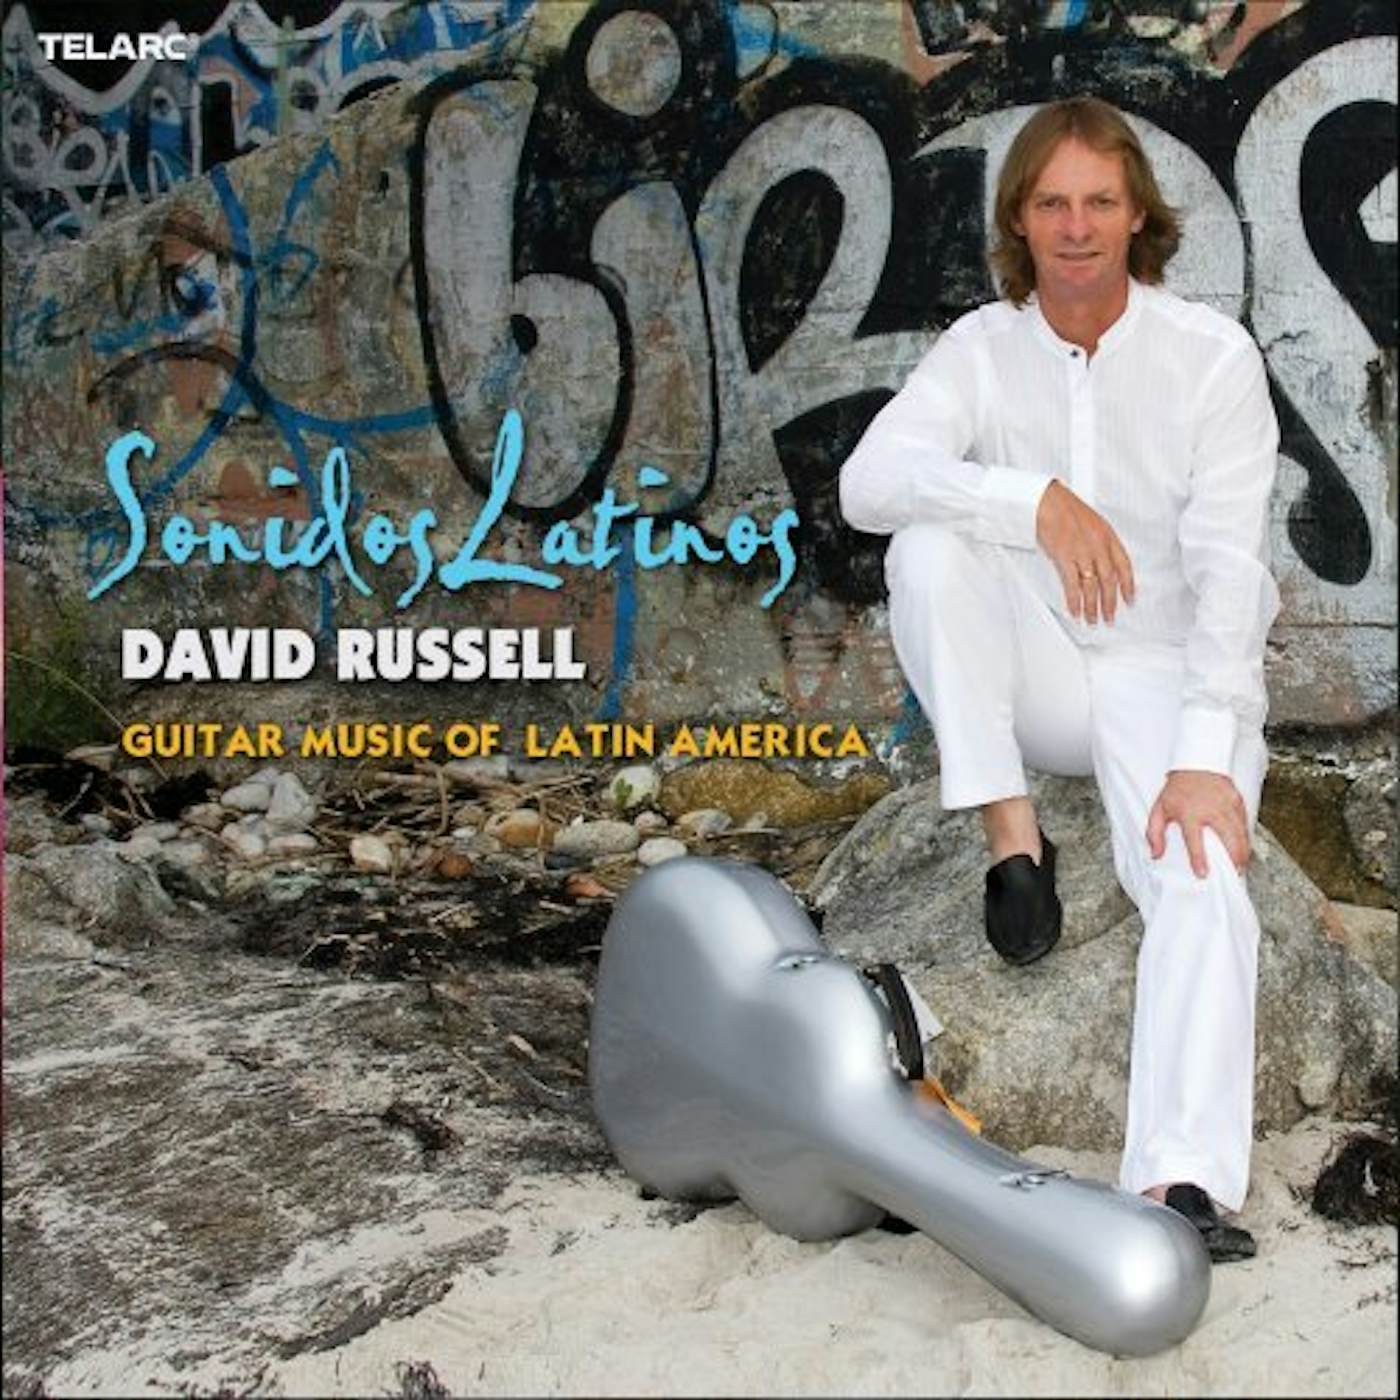 David Russell SONIDOS LATINOS CD